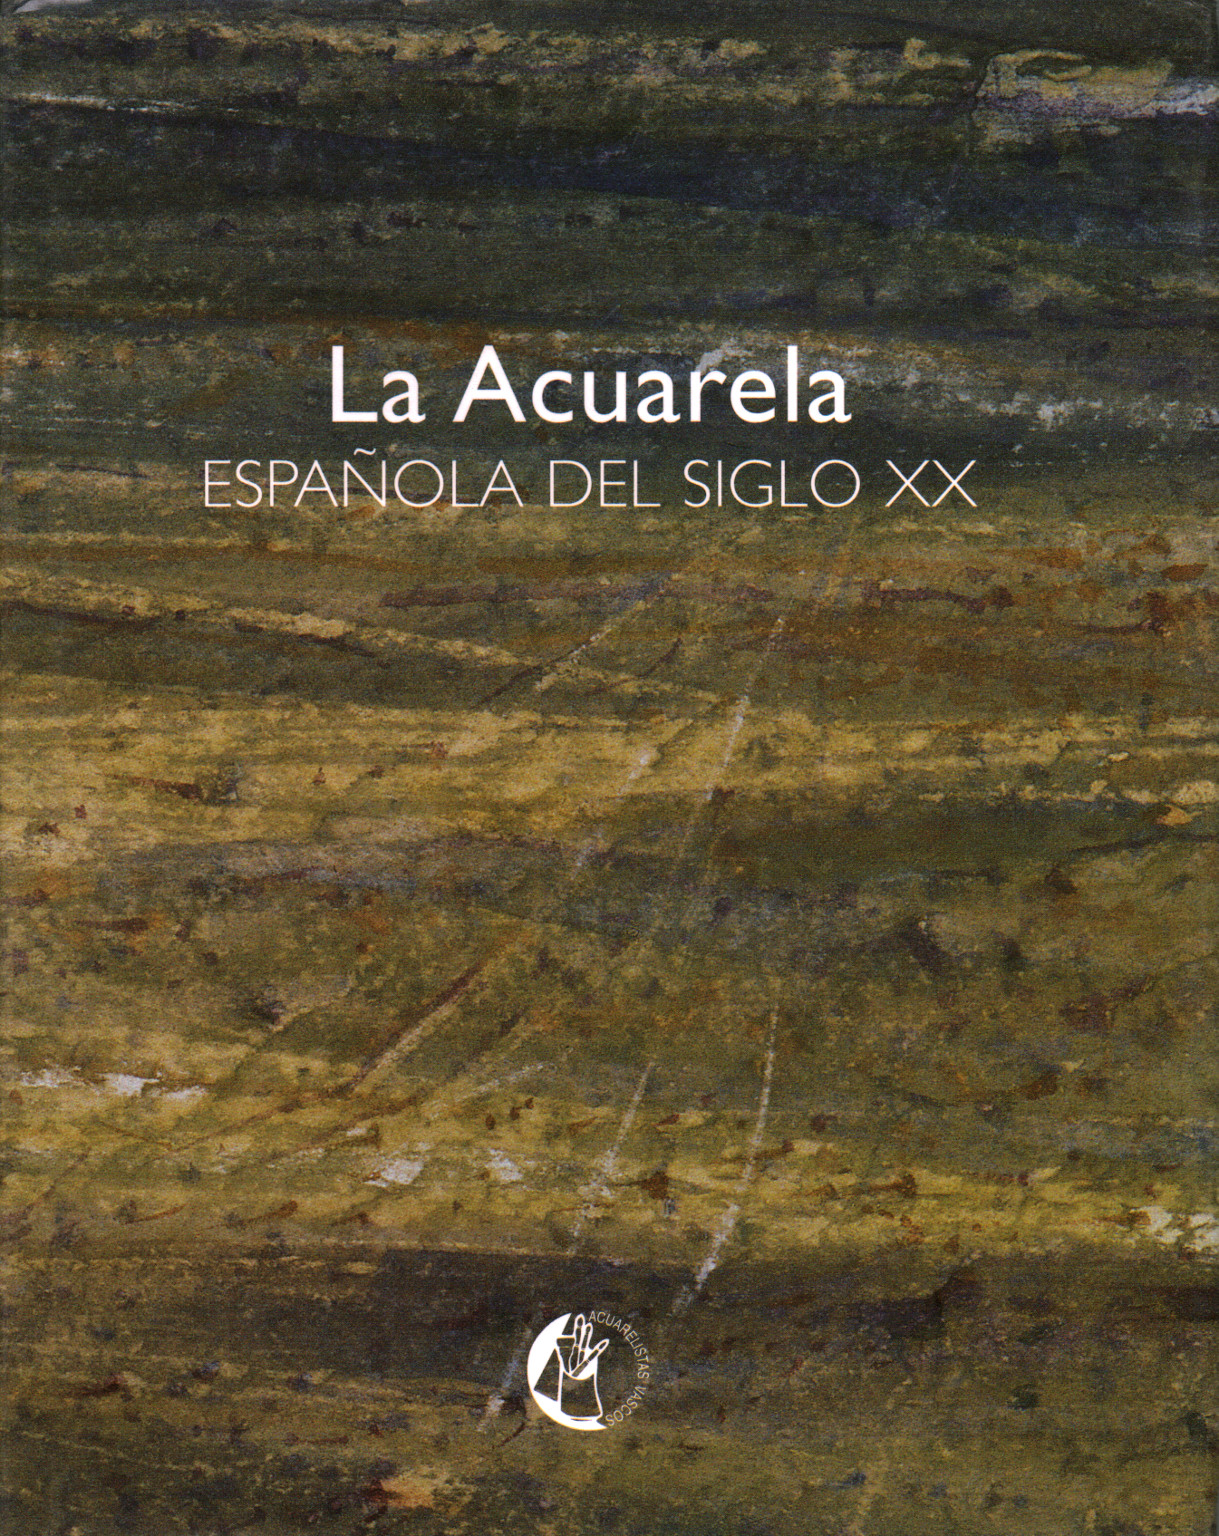 Le Acuarela espanola del siglo XX, s.un.